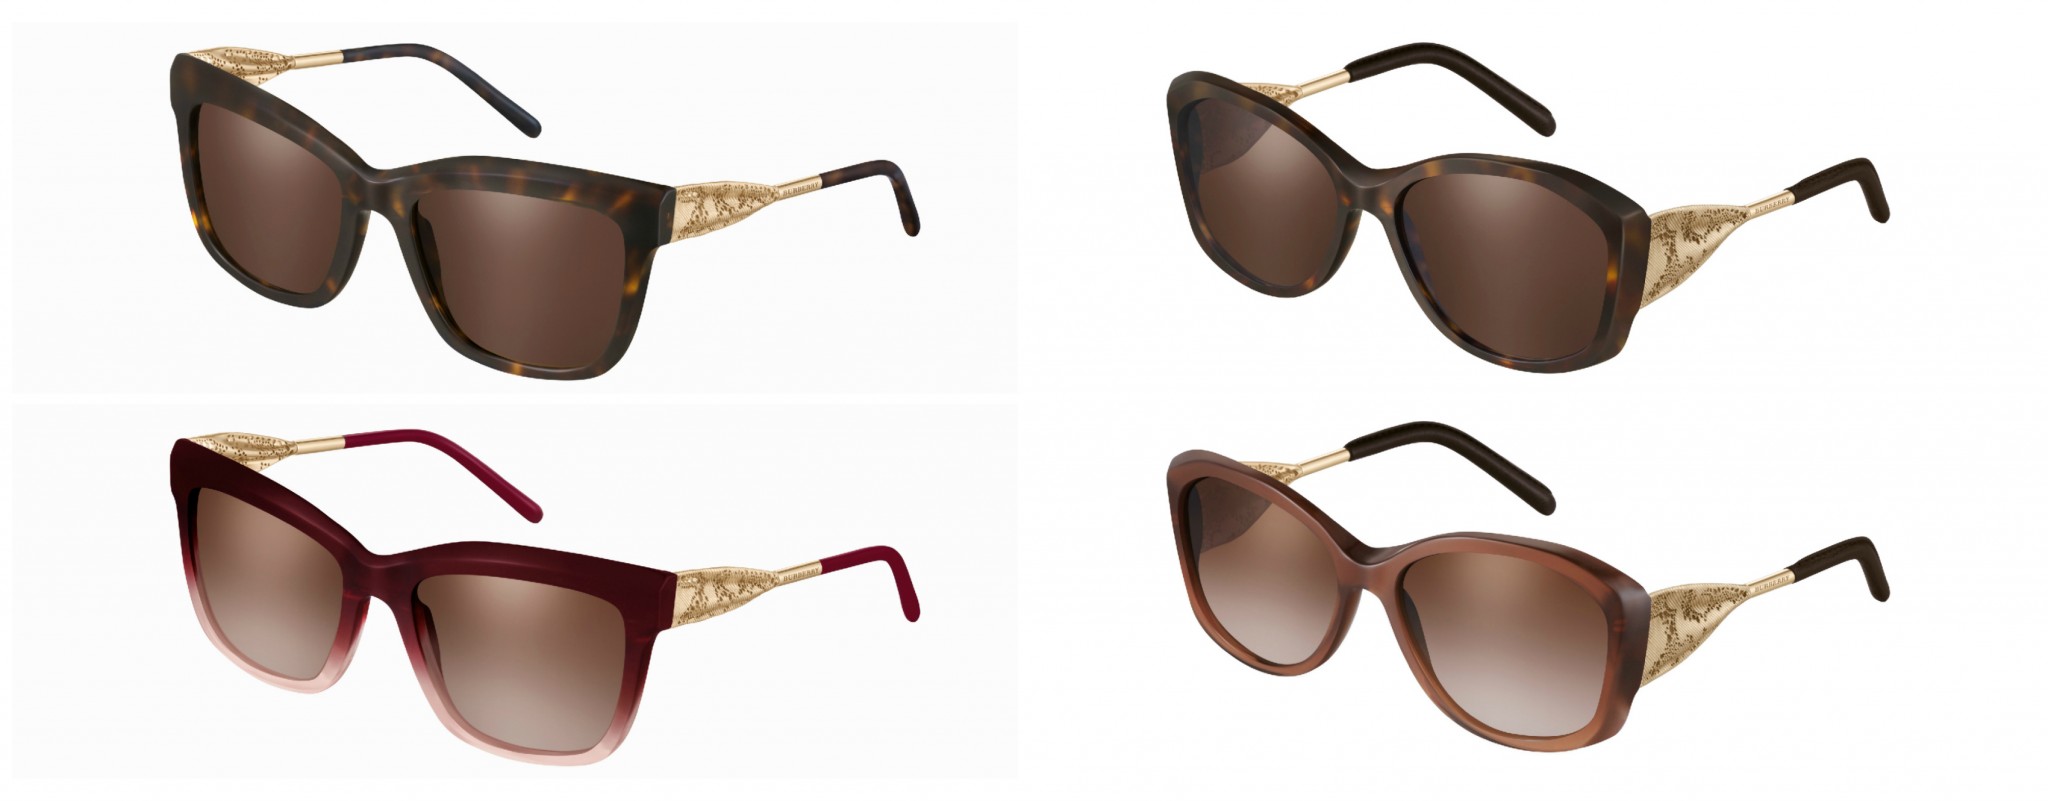 sunglasses burberry 2015